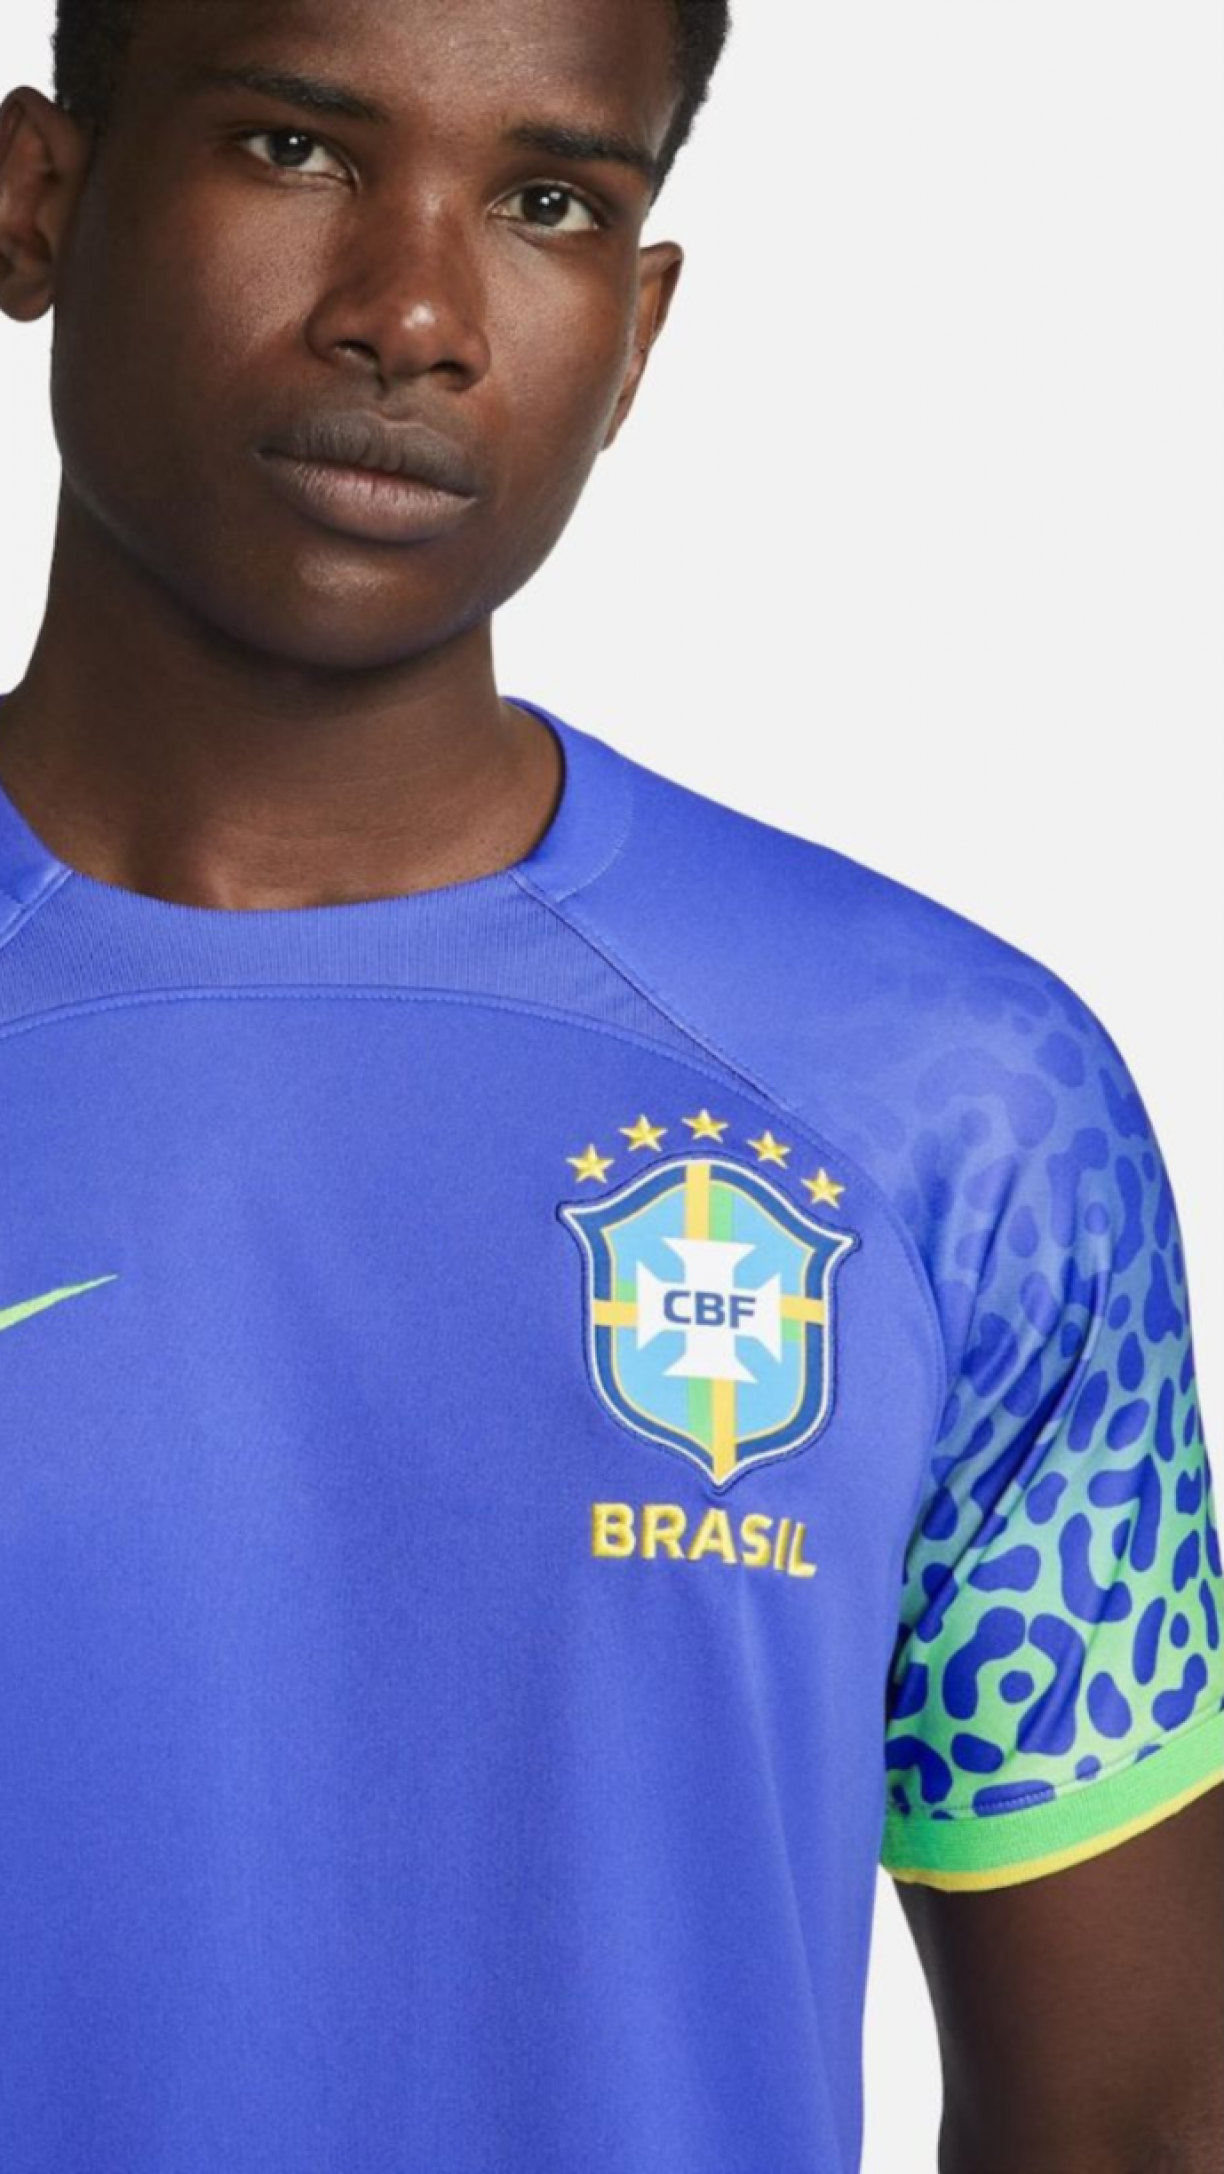 Camiseta Nike CBF Brasil Core Crest Verde - Compre Agora